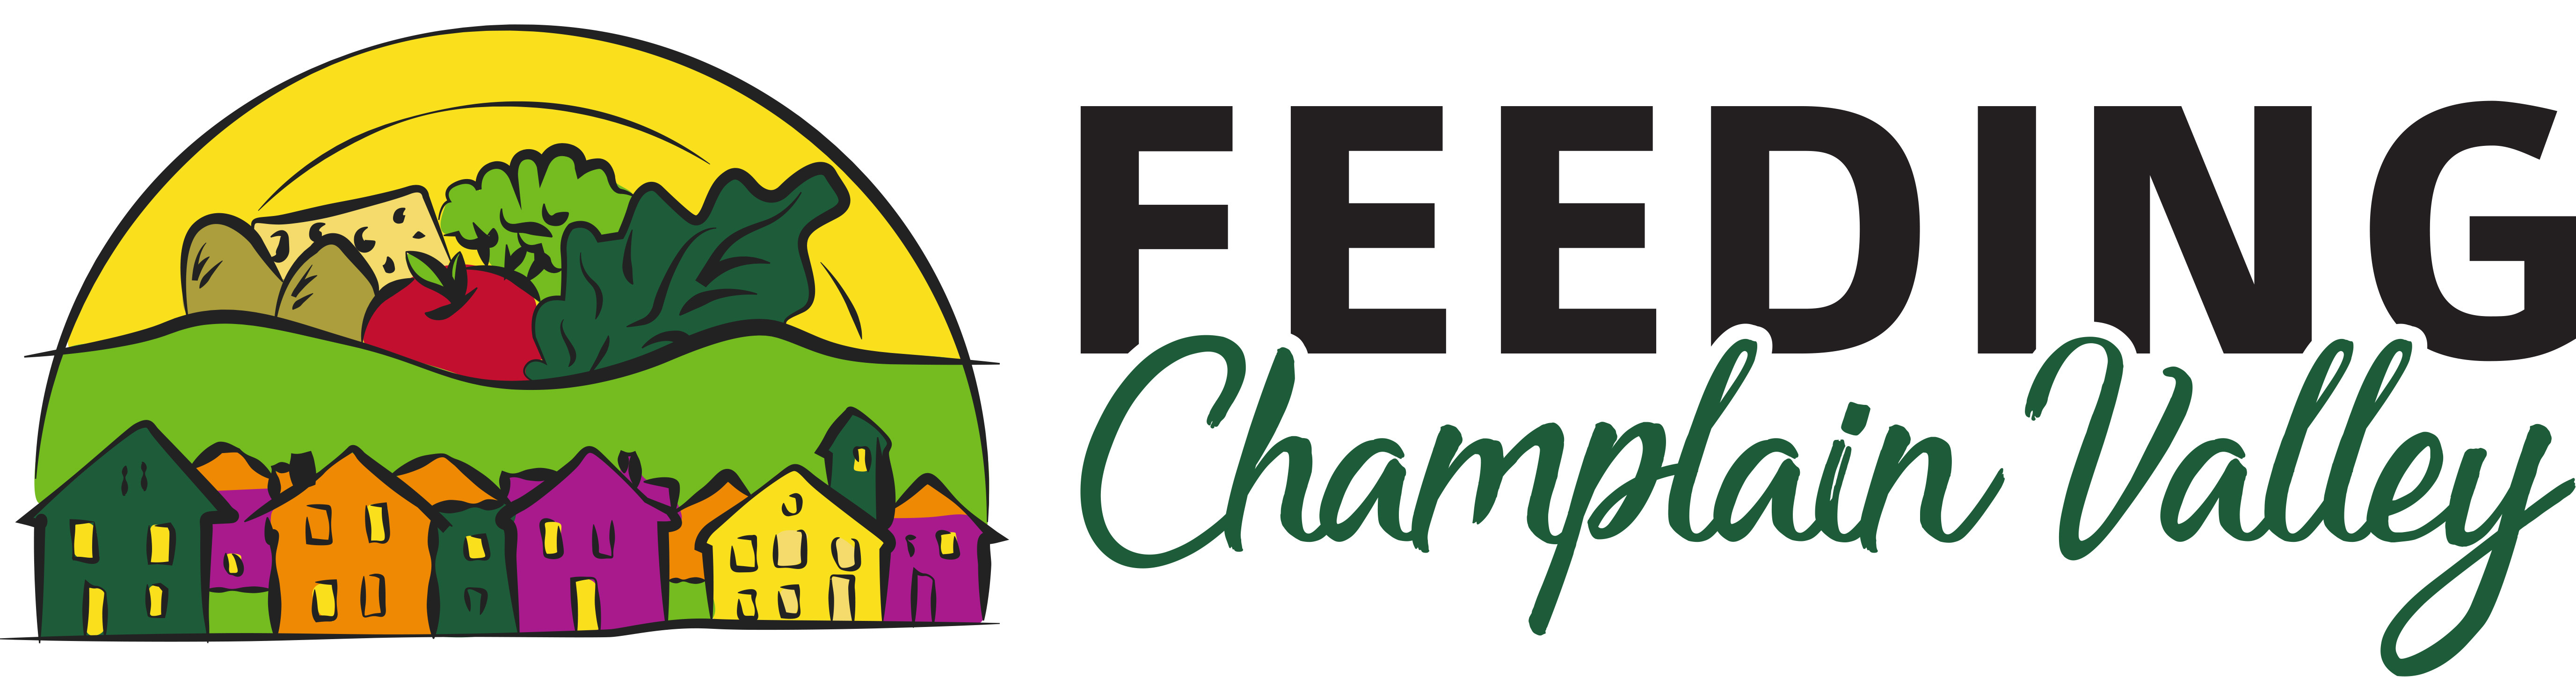 Feeding Champlain Valley logo